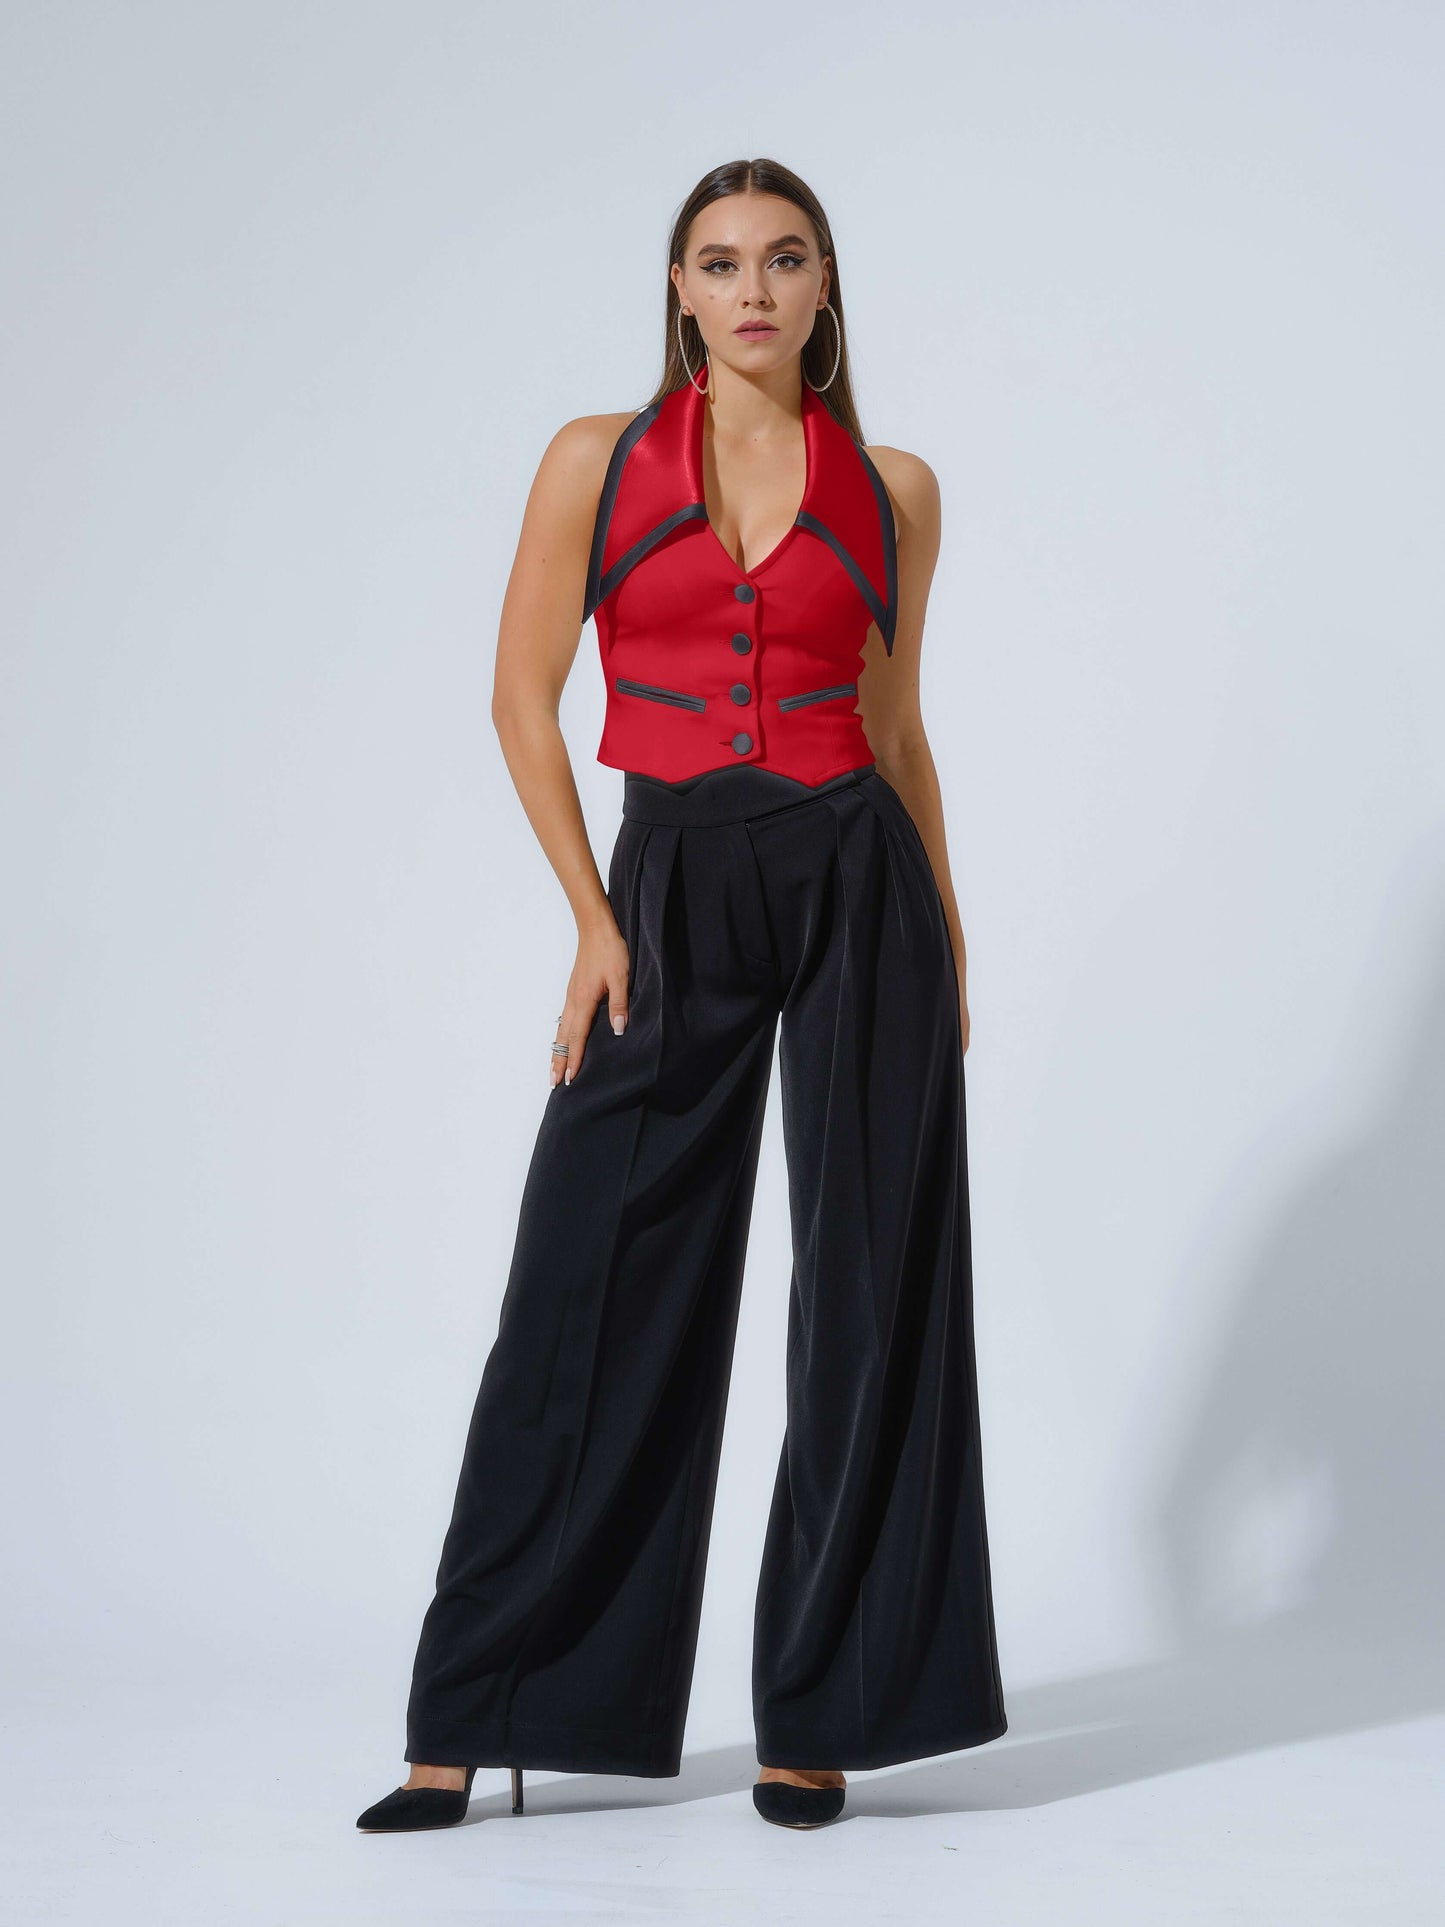 Born to Run Cropped Tailored Waistcoat - Fierce Red by Tia Dorraine Women's Luxury Fashion Designer Clothing Brand